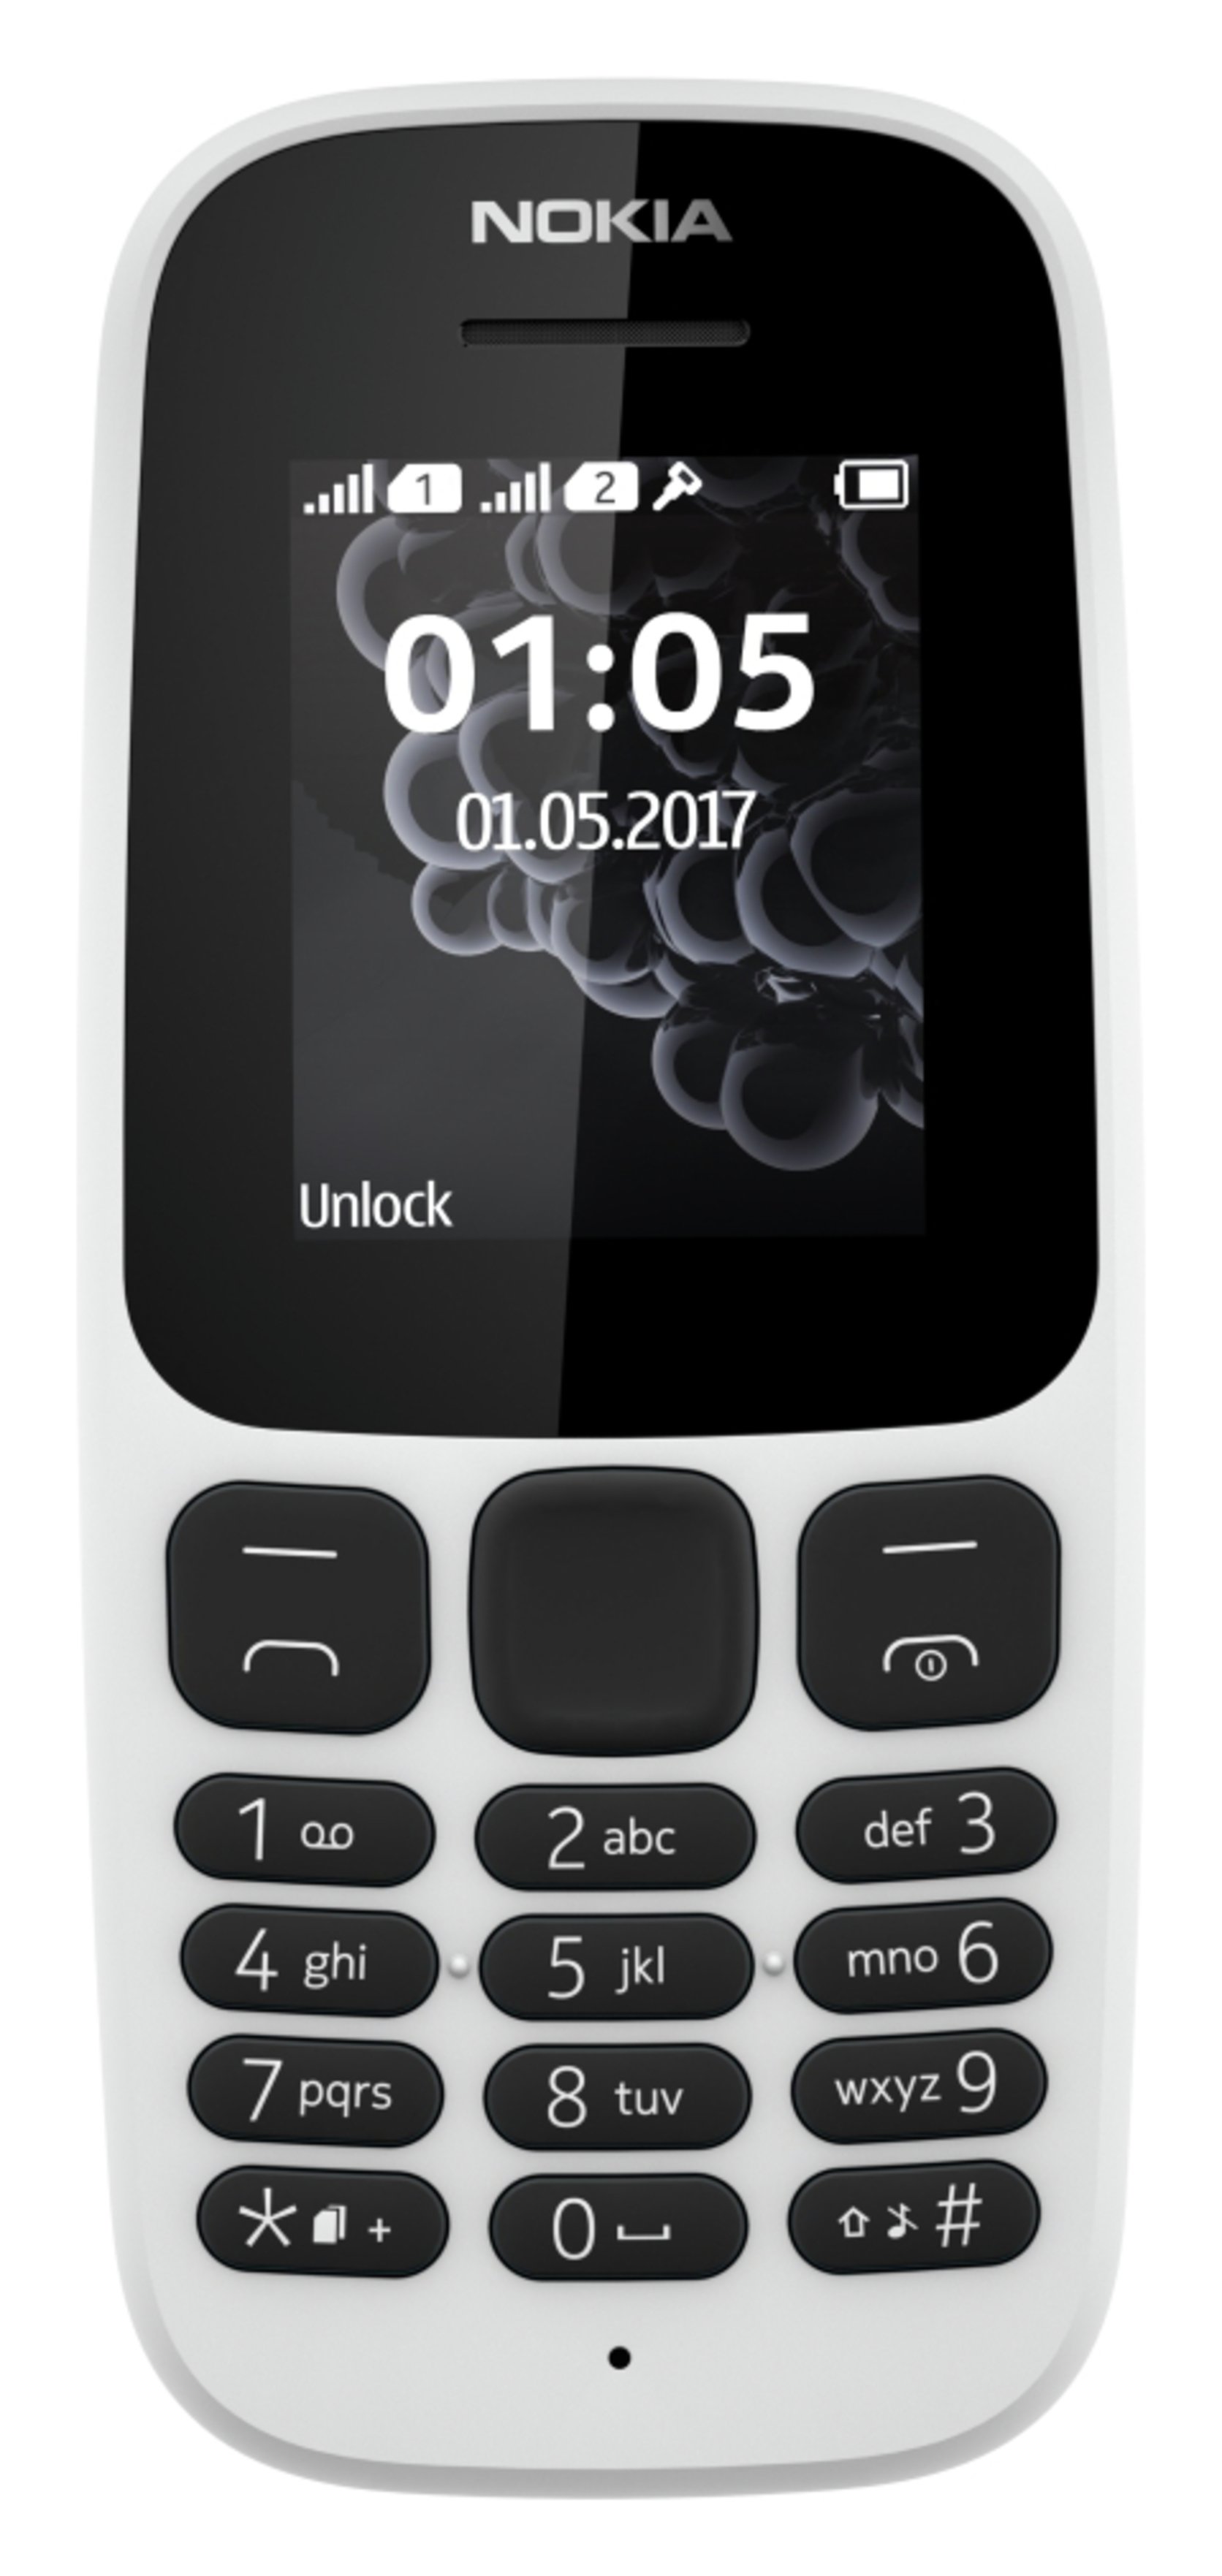 SIM Free Nokia 105 2017 Mobile Phone review